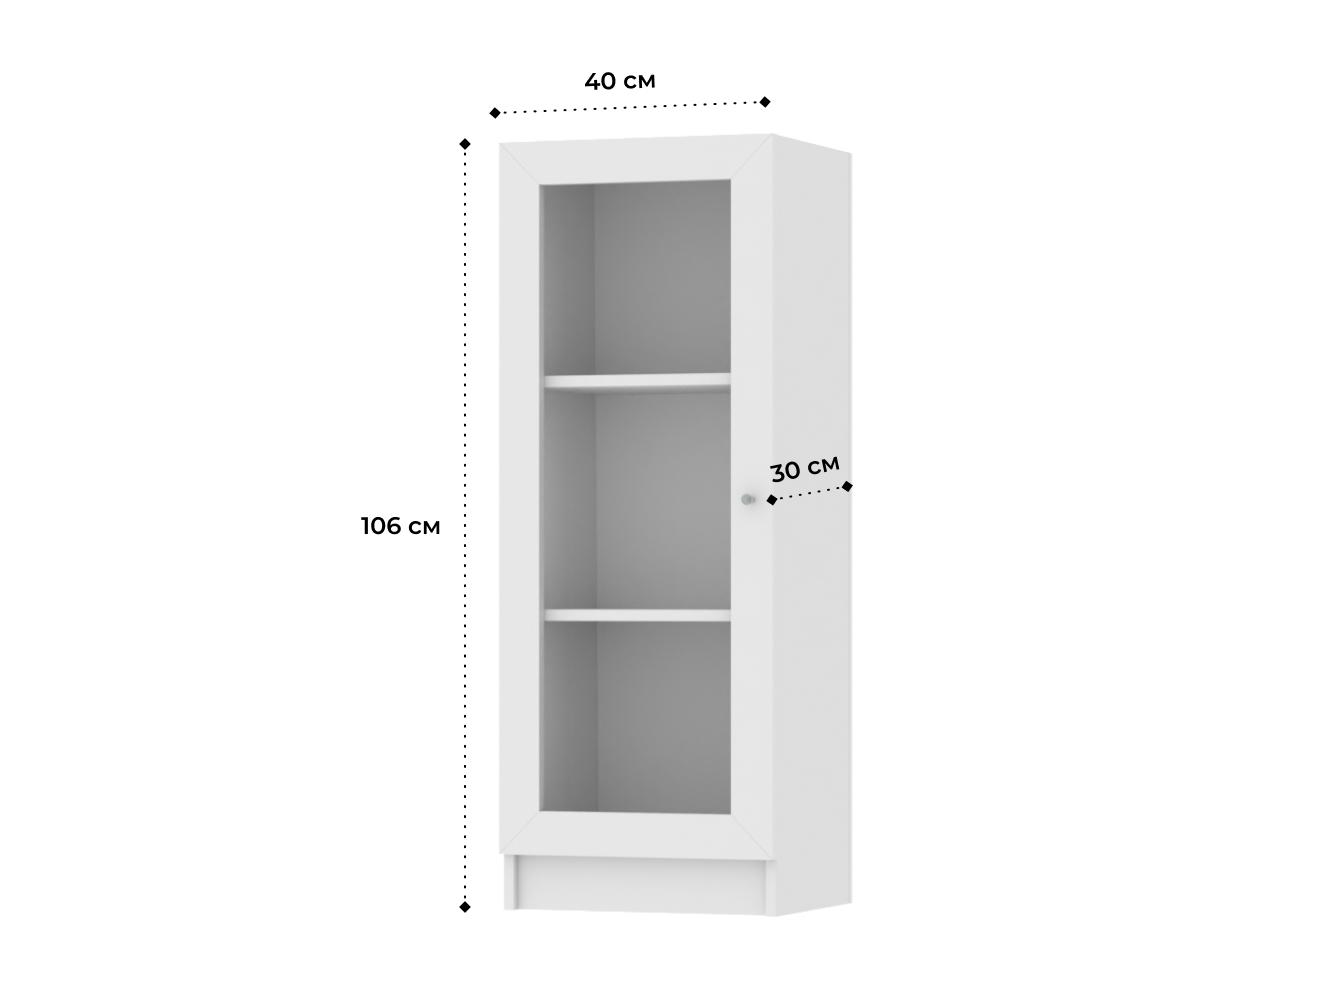 Изображение товара Стеллаж Билли 126 white ИКЕА (IKEA), 40x30x106 см на сайте adeta.ru